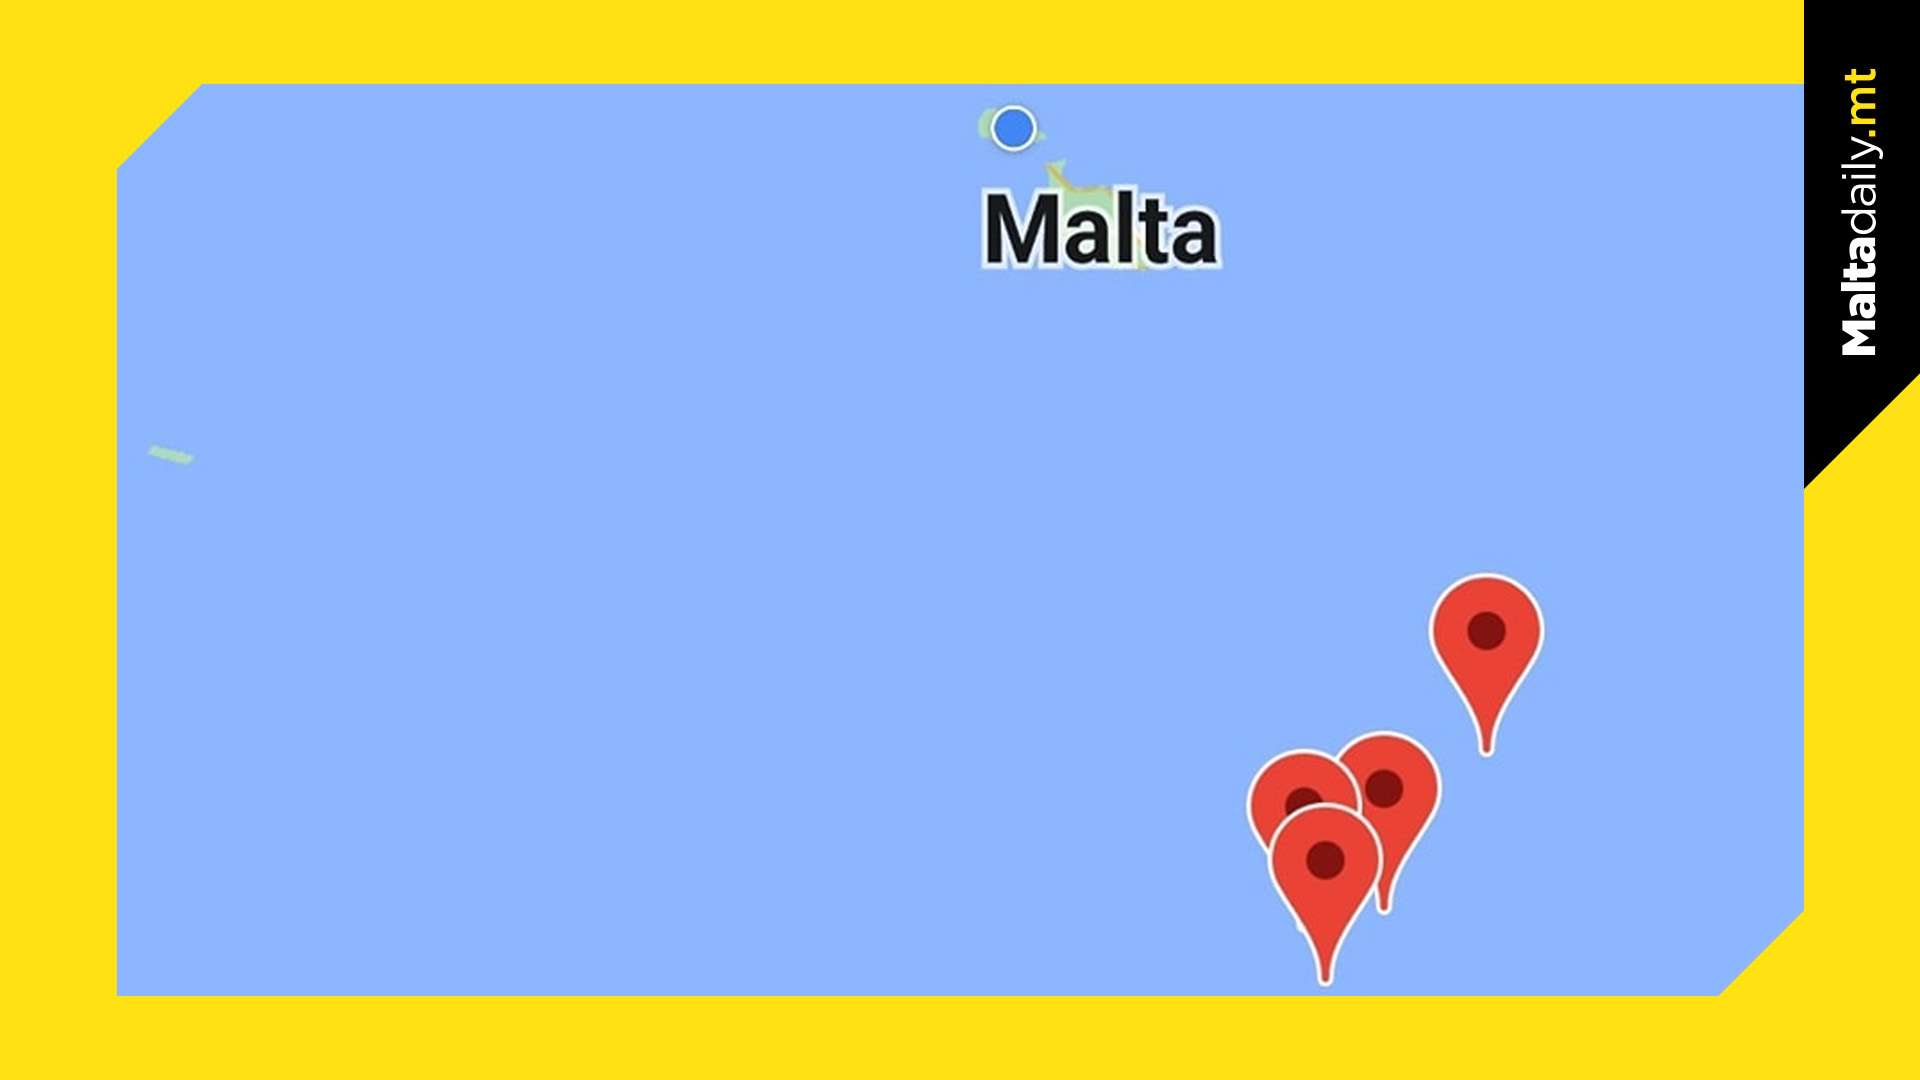 Magnitude 5.3 earthquake felt across Malta in the middle of the night